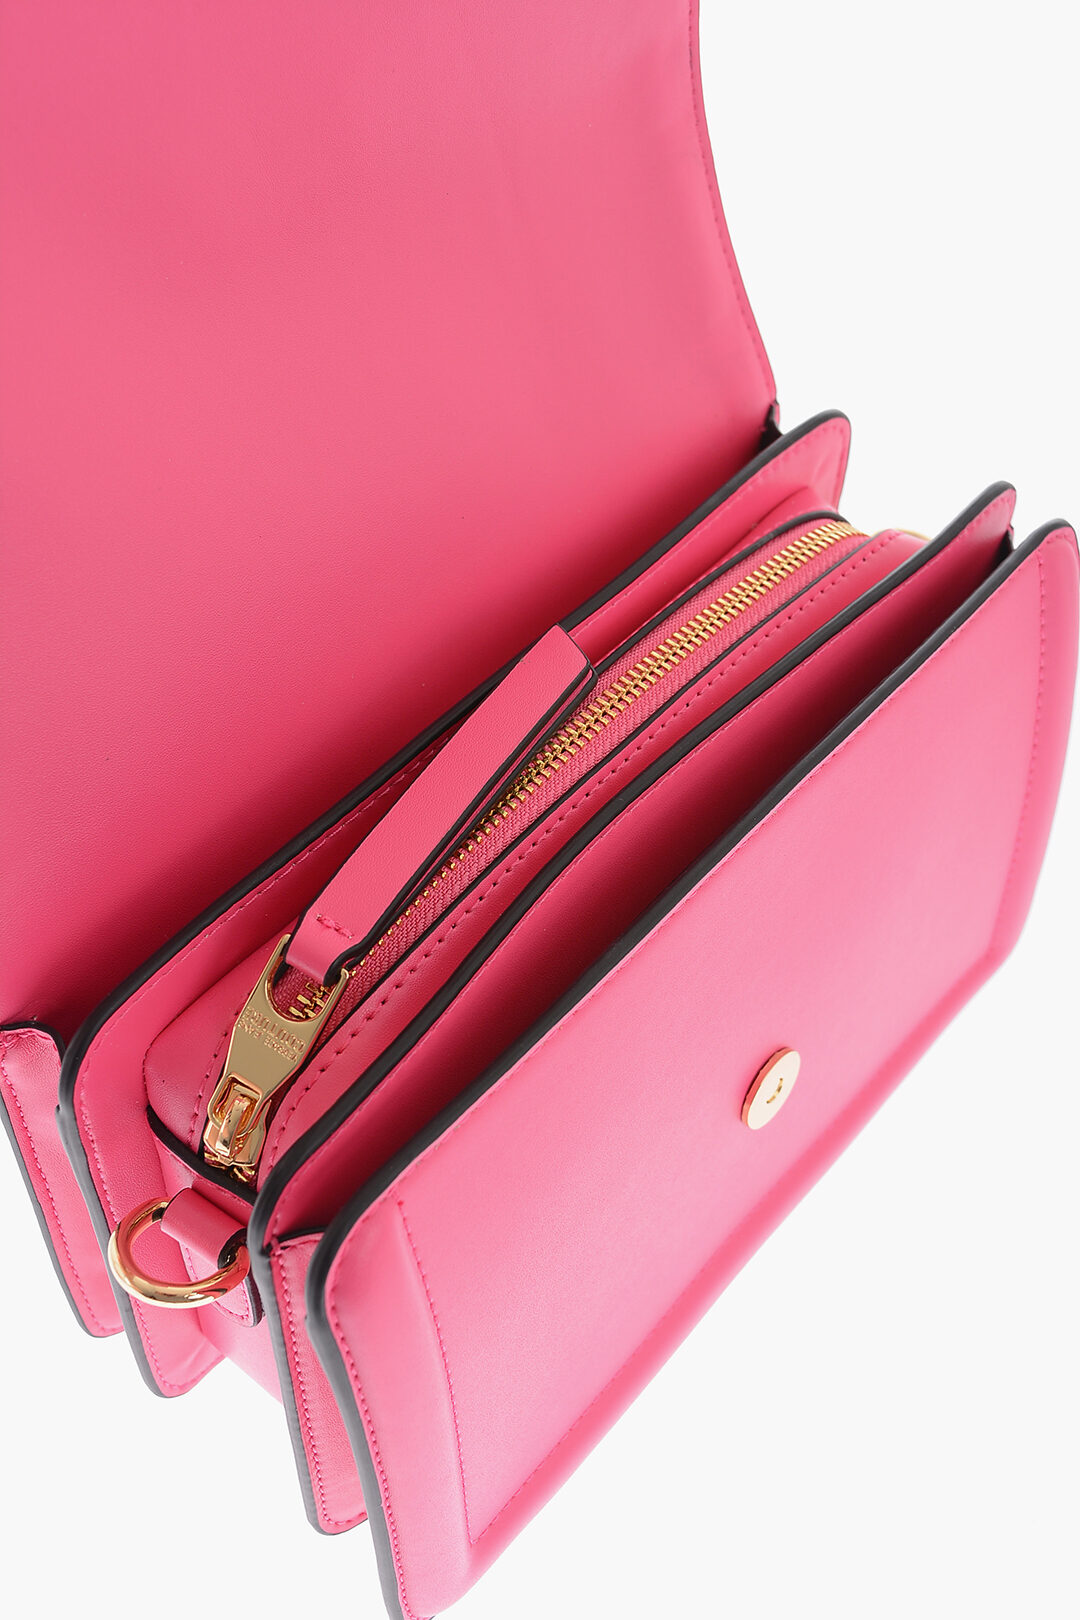 Fgalaze Red Leather Bag with Braided Handle, Fashion Purse, Original Rustic  Shoulder Handbag Claudia: Handbags: Amazon.com